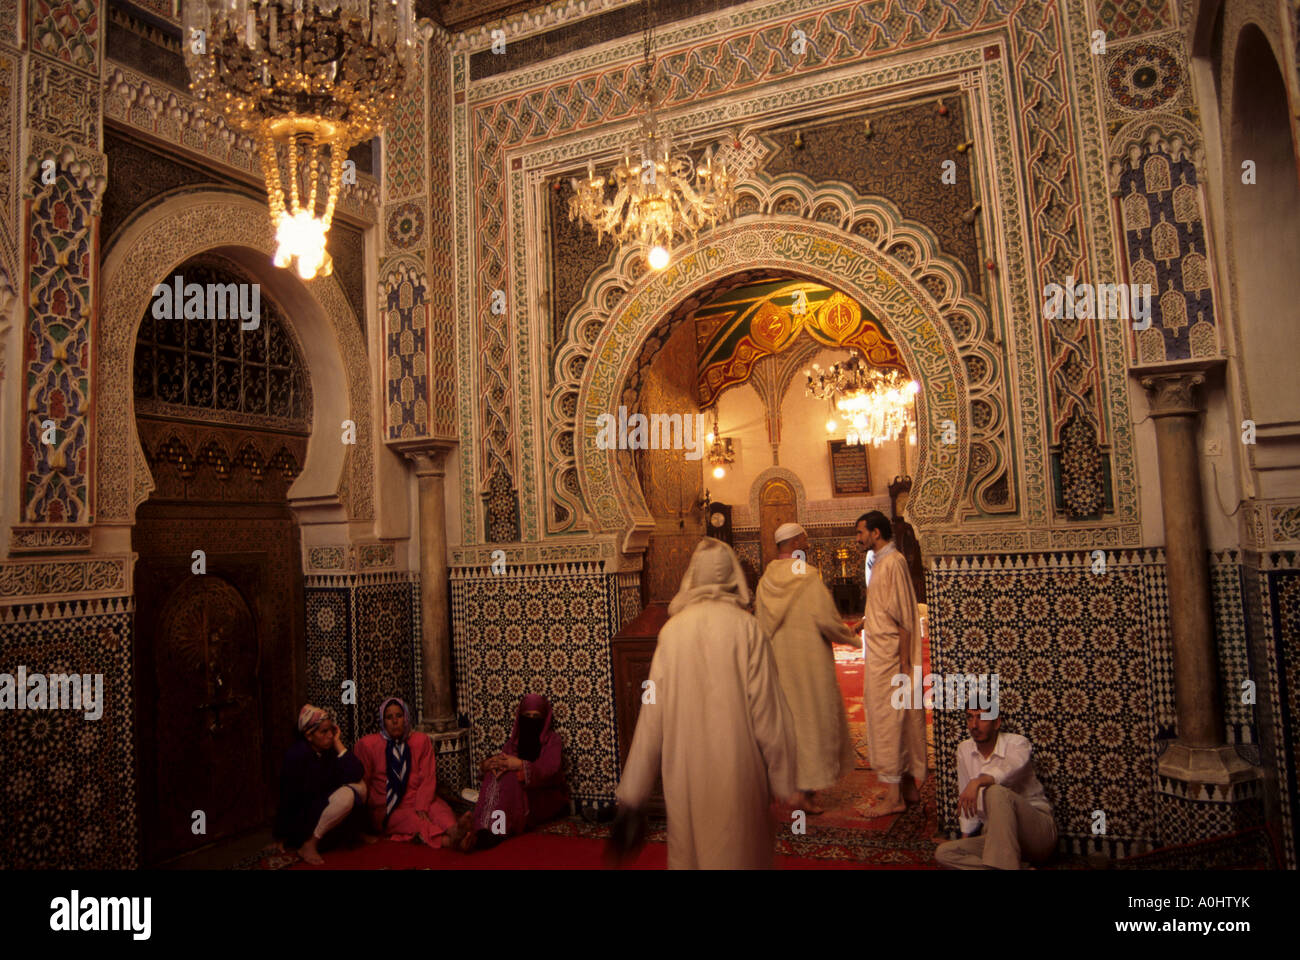 fes medina morocco mosque muslim islamic religion interior Stock Photo